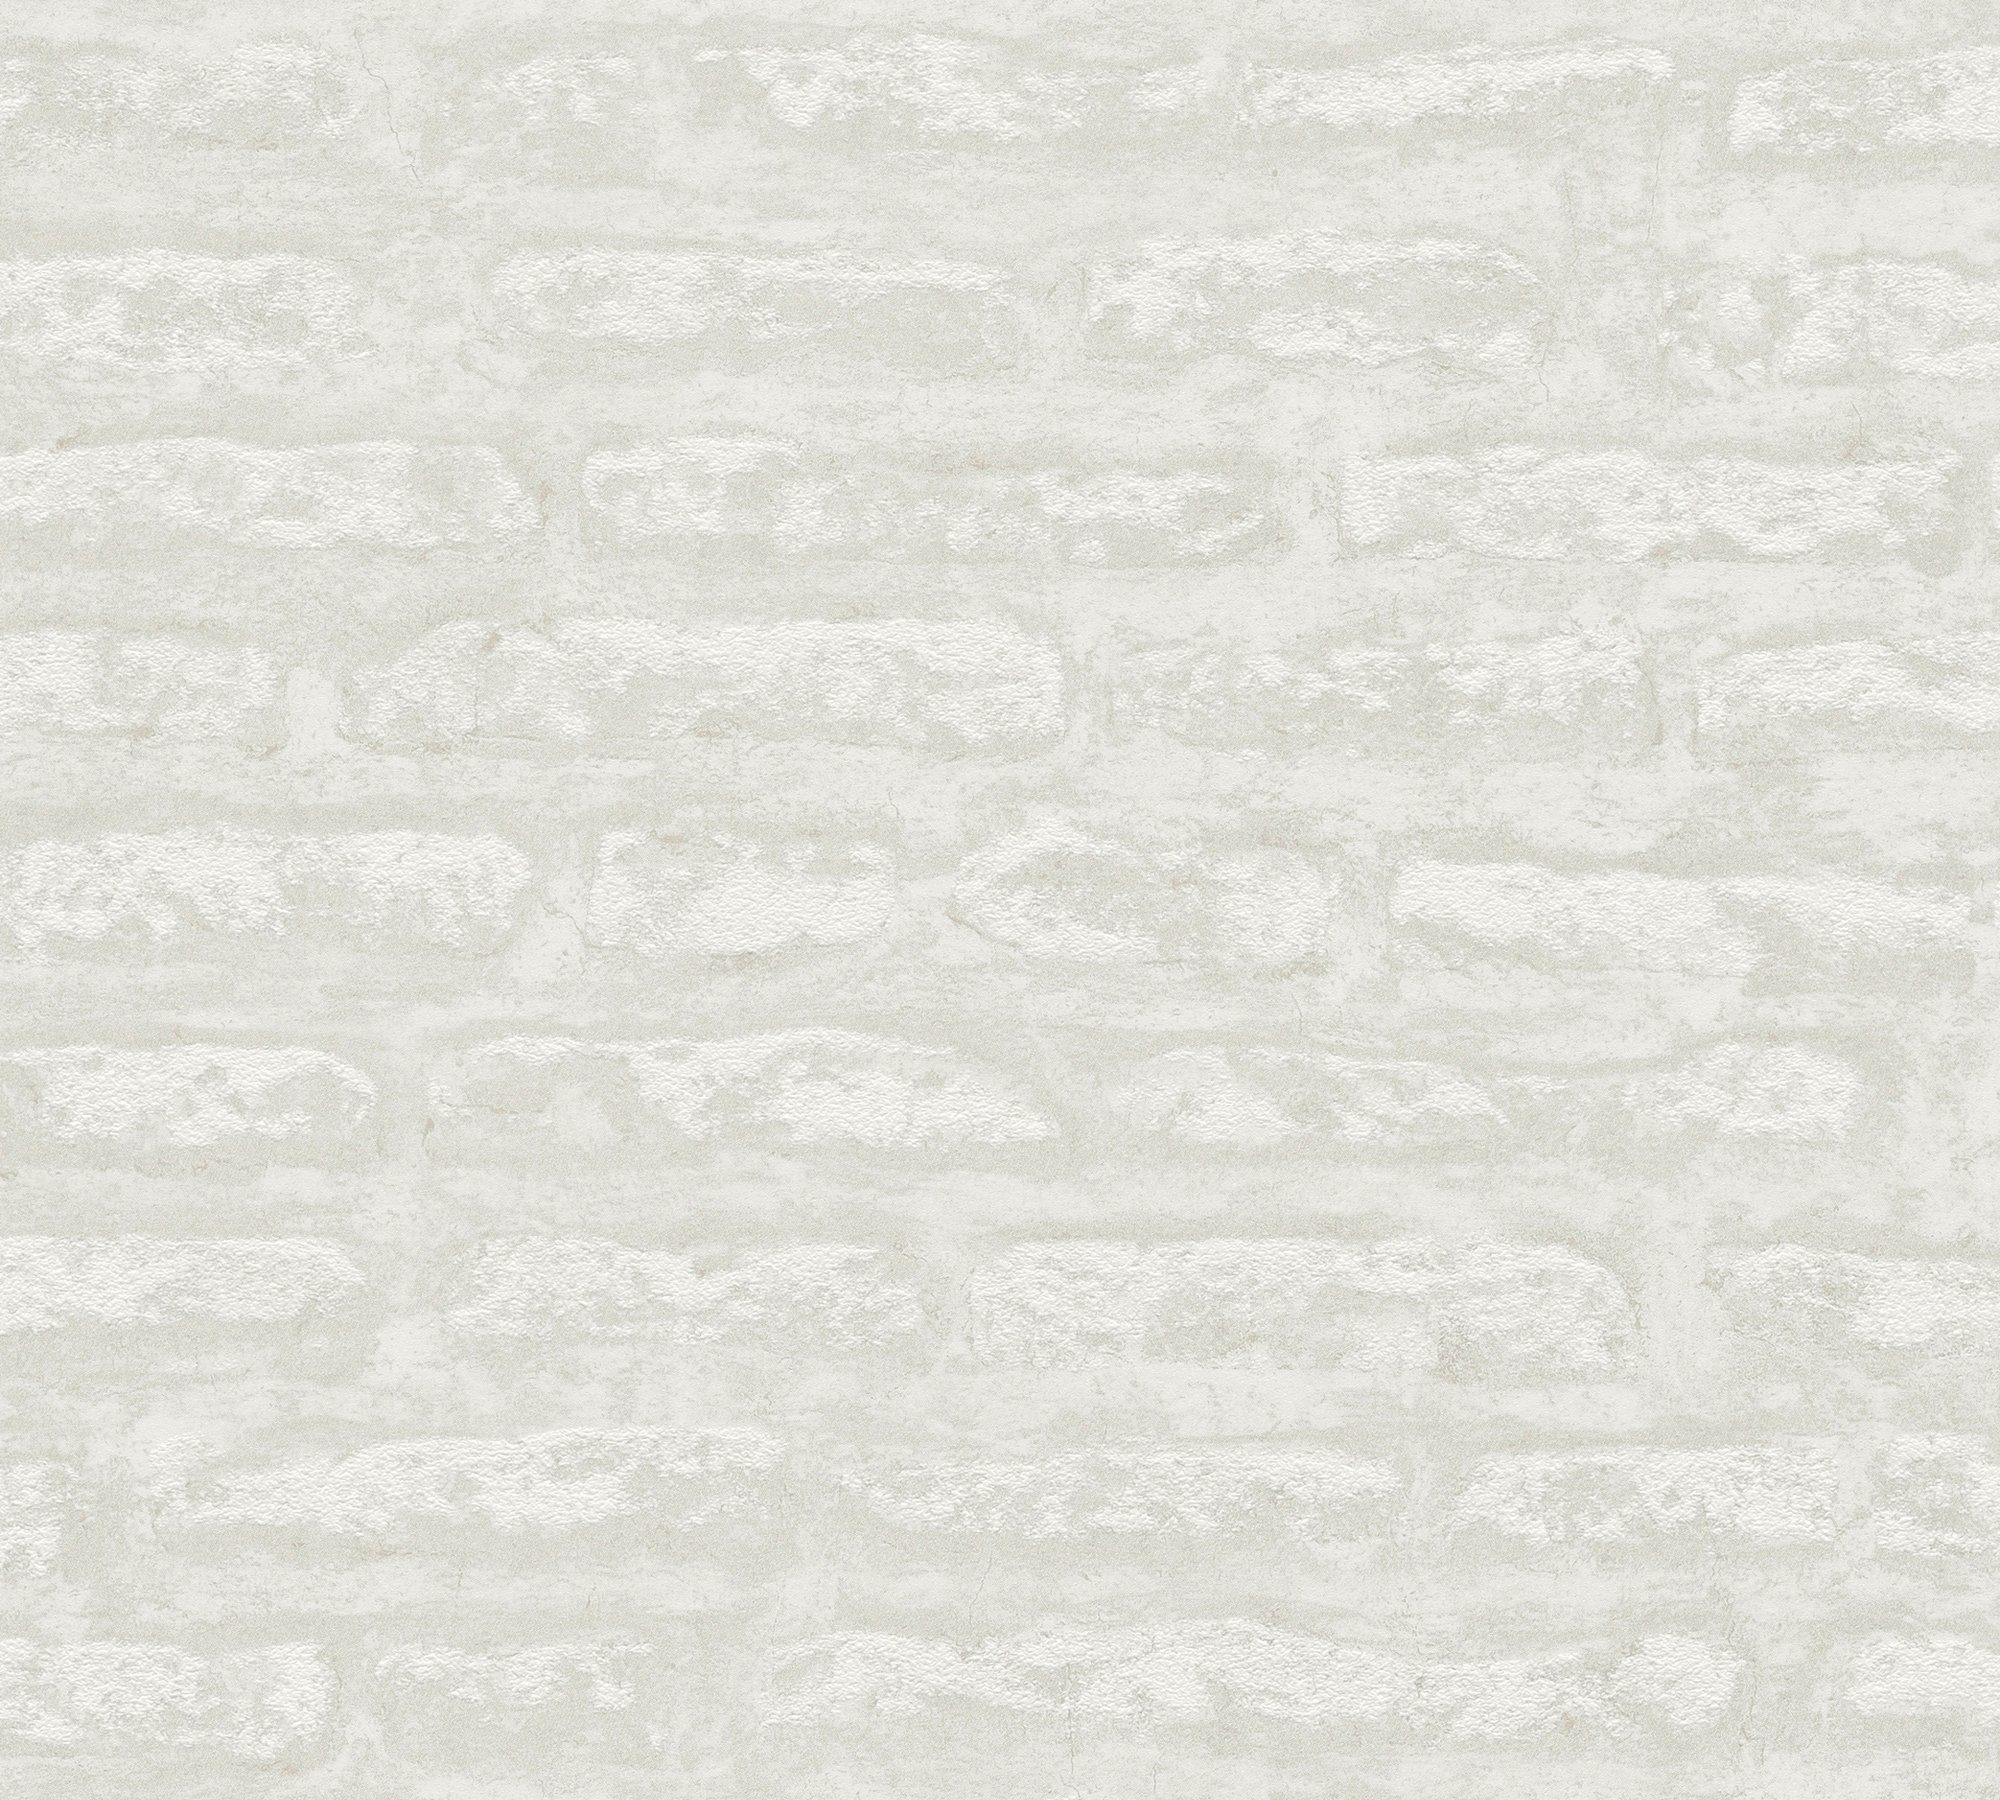 A.S. Création strukturiert, matt, steinoptik steintapete 2 Hellbraun Weiß Tapete Steinwand, St), (1 Attractive Vliestapete Steinoptik Weiß,Hellgrau steinwand